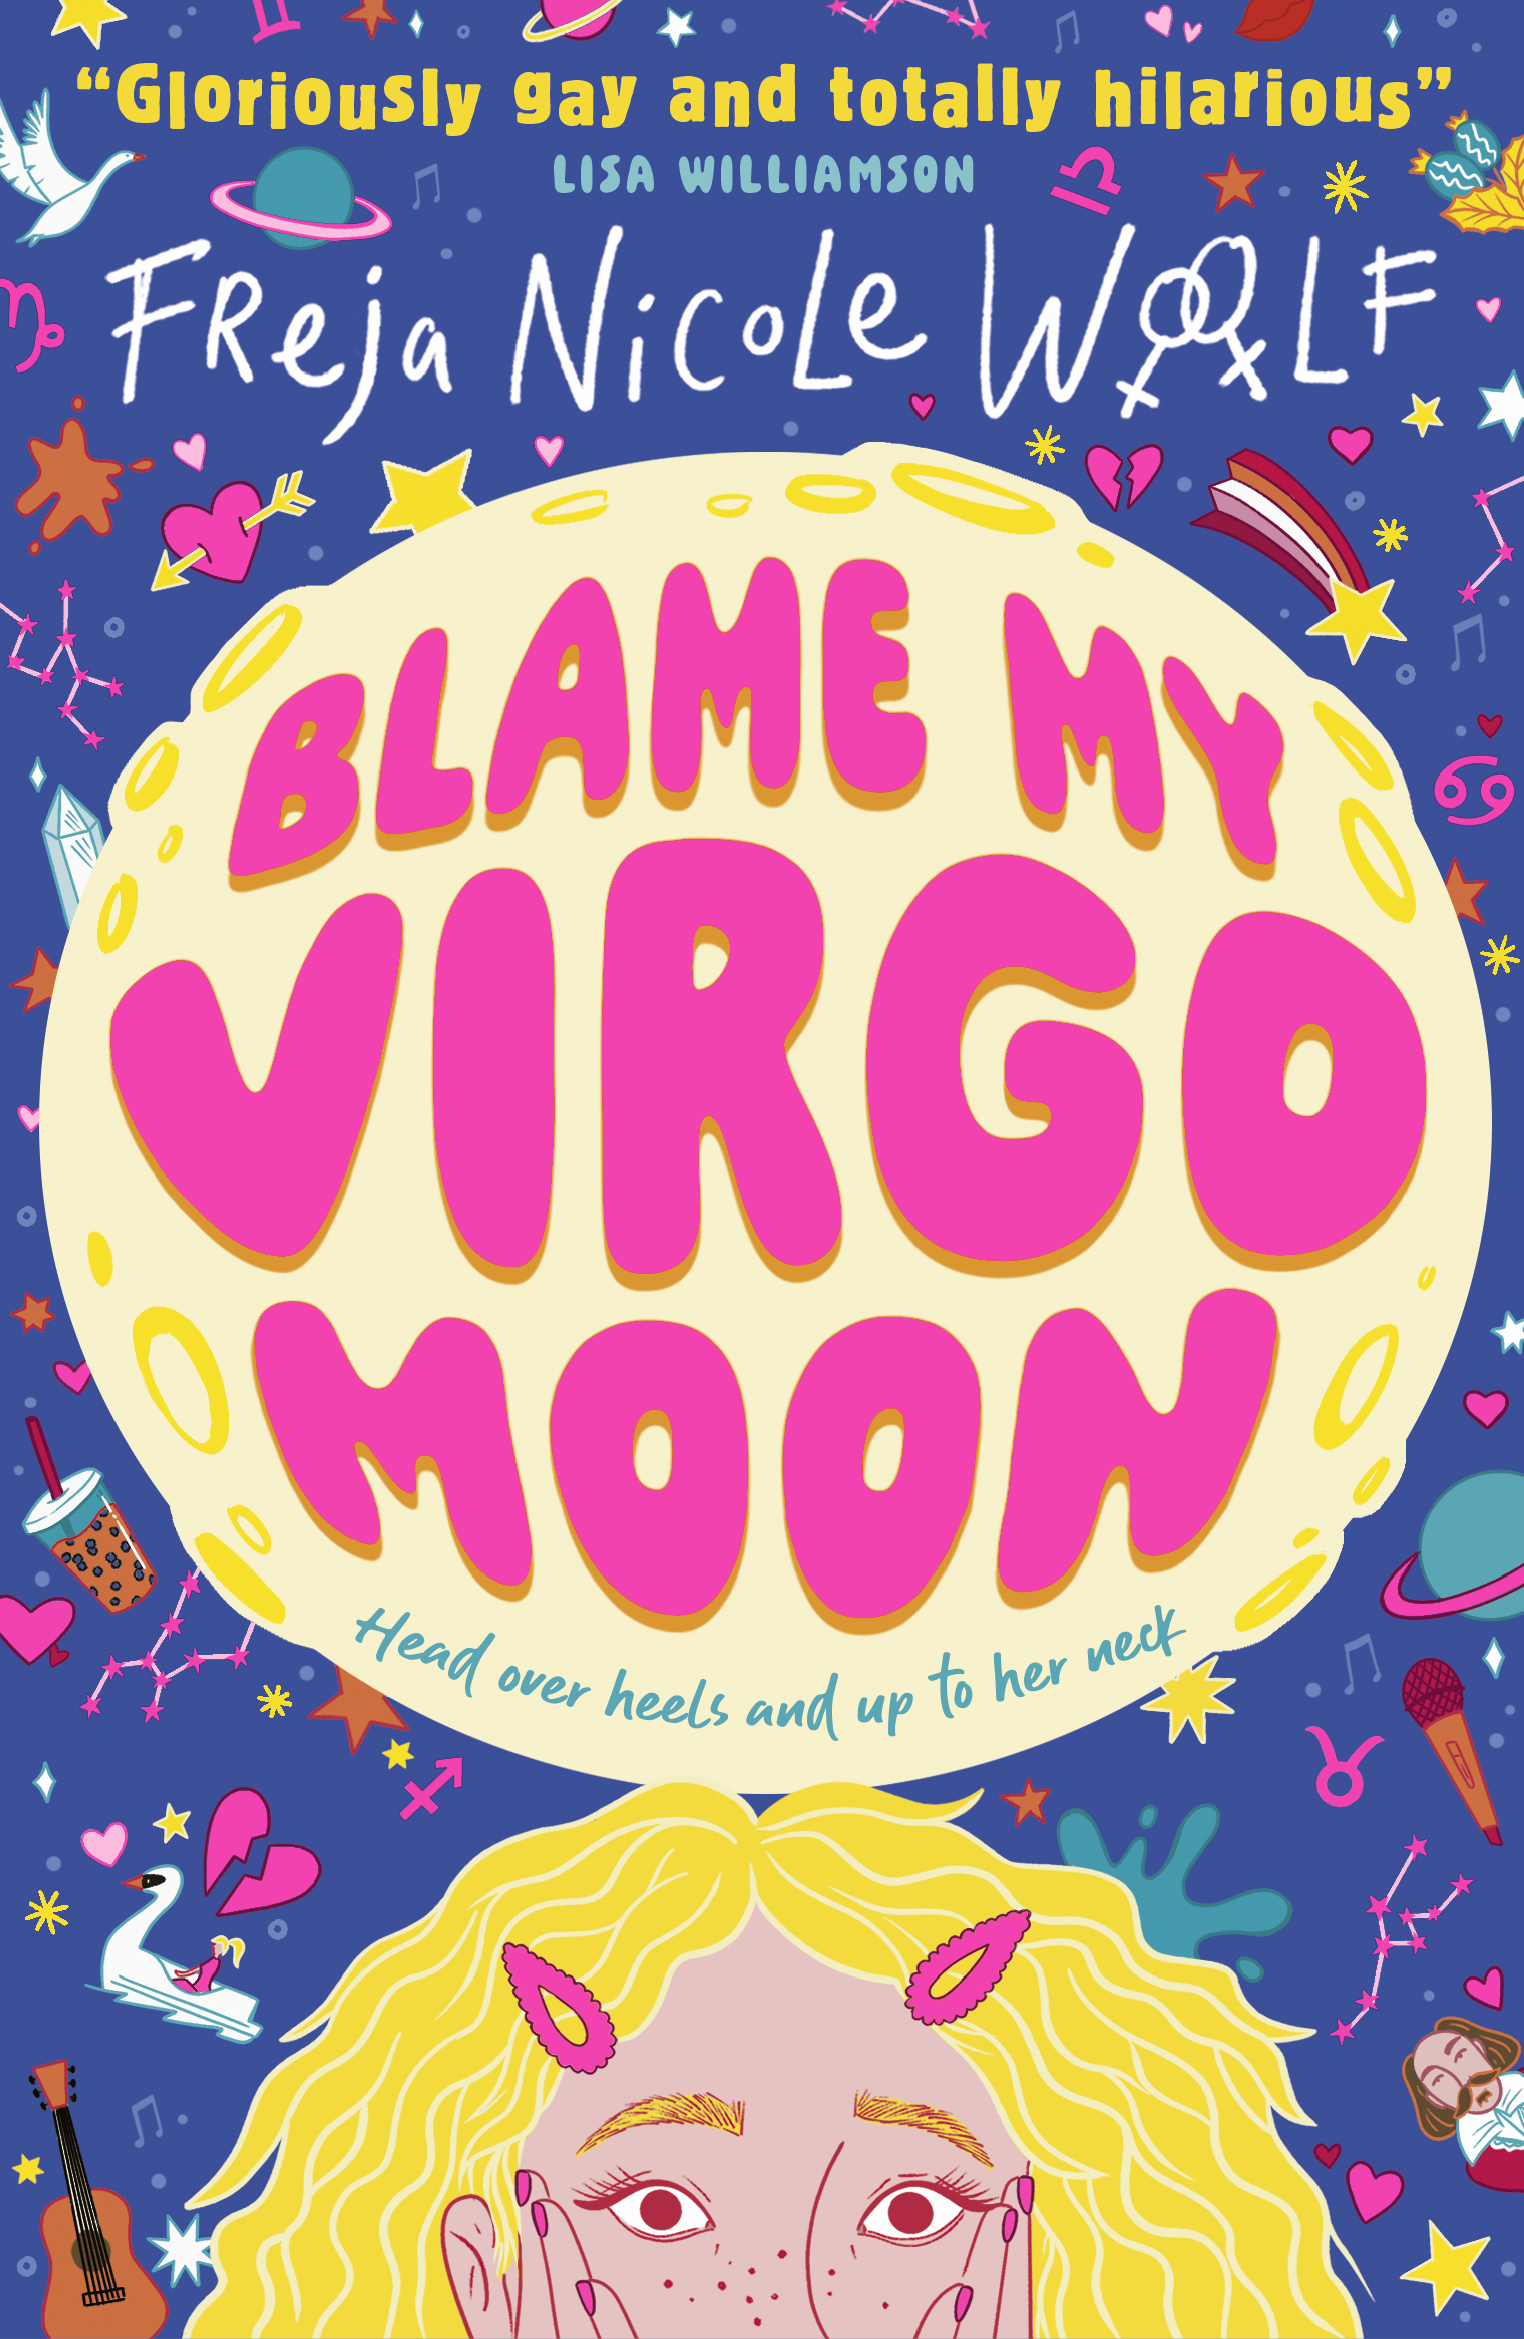 Blame-My-Virgo-Moon